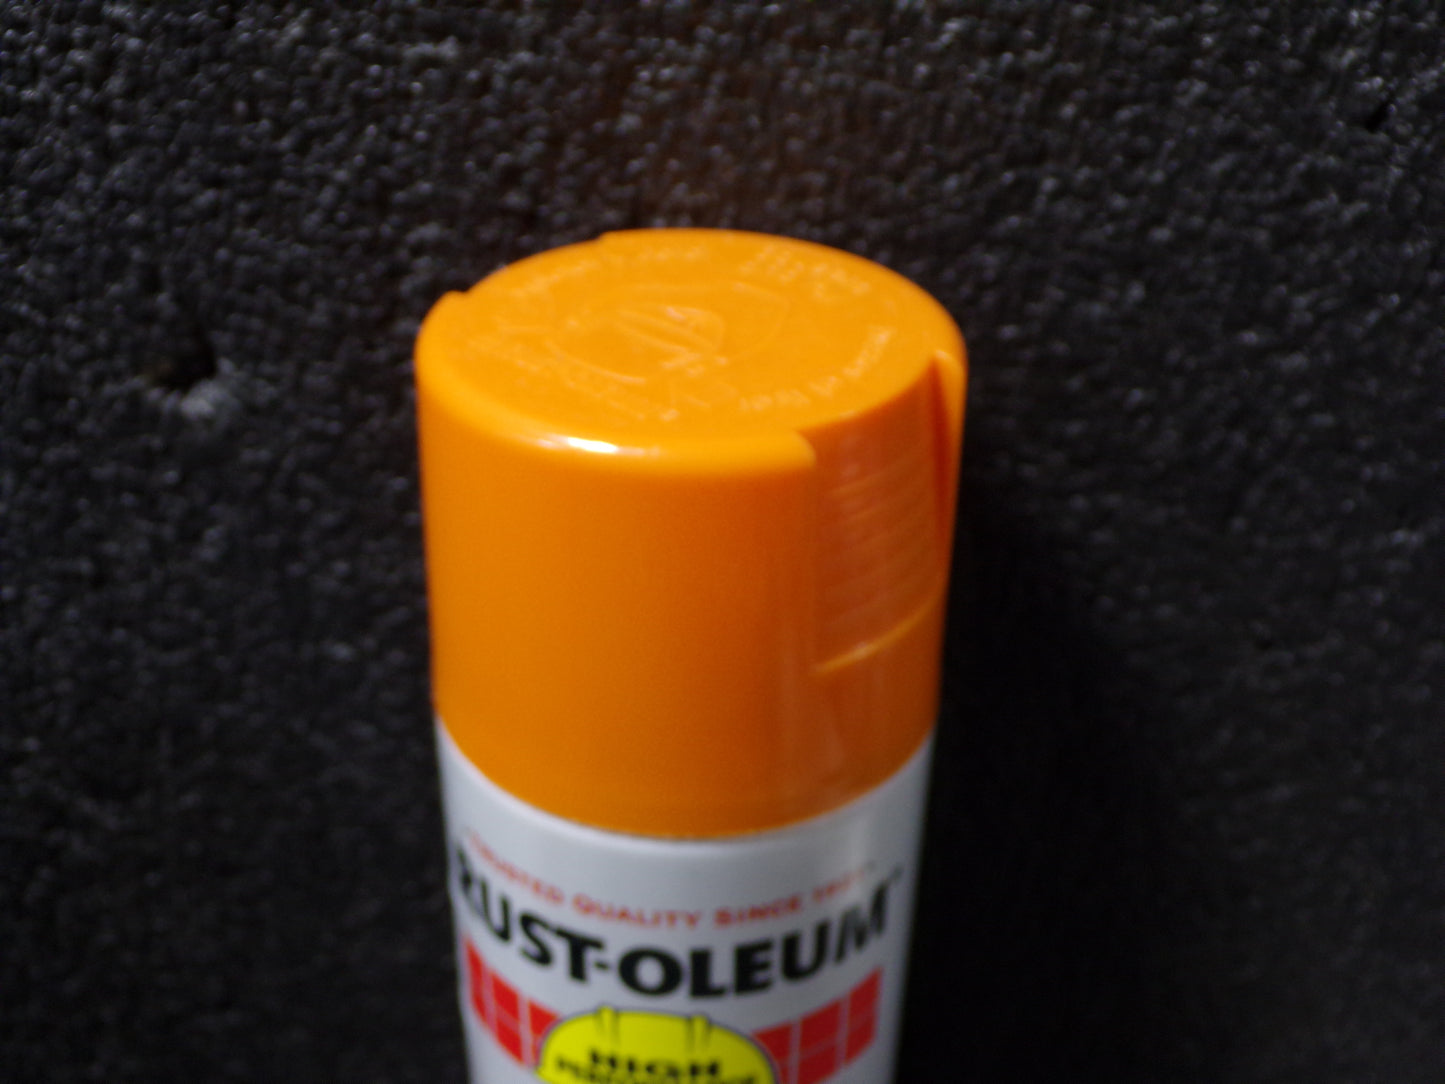 RUST-OLEUM High Performance Rust Preventative Spray Paint in Gloss Safety Orange for Metal, Steel, 15 oz (CR00025-X02)